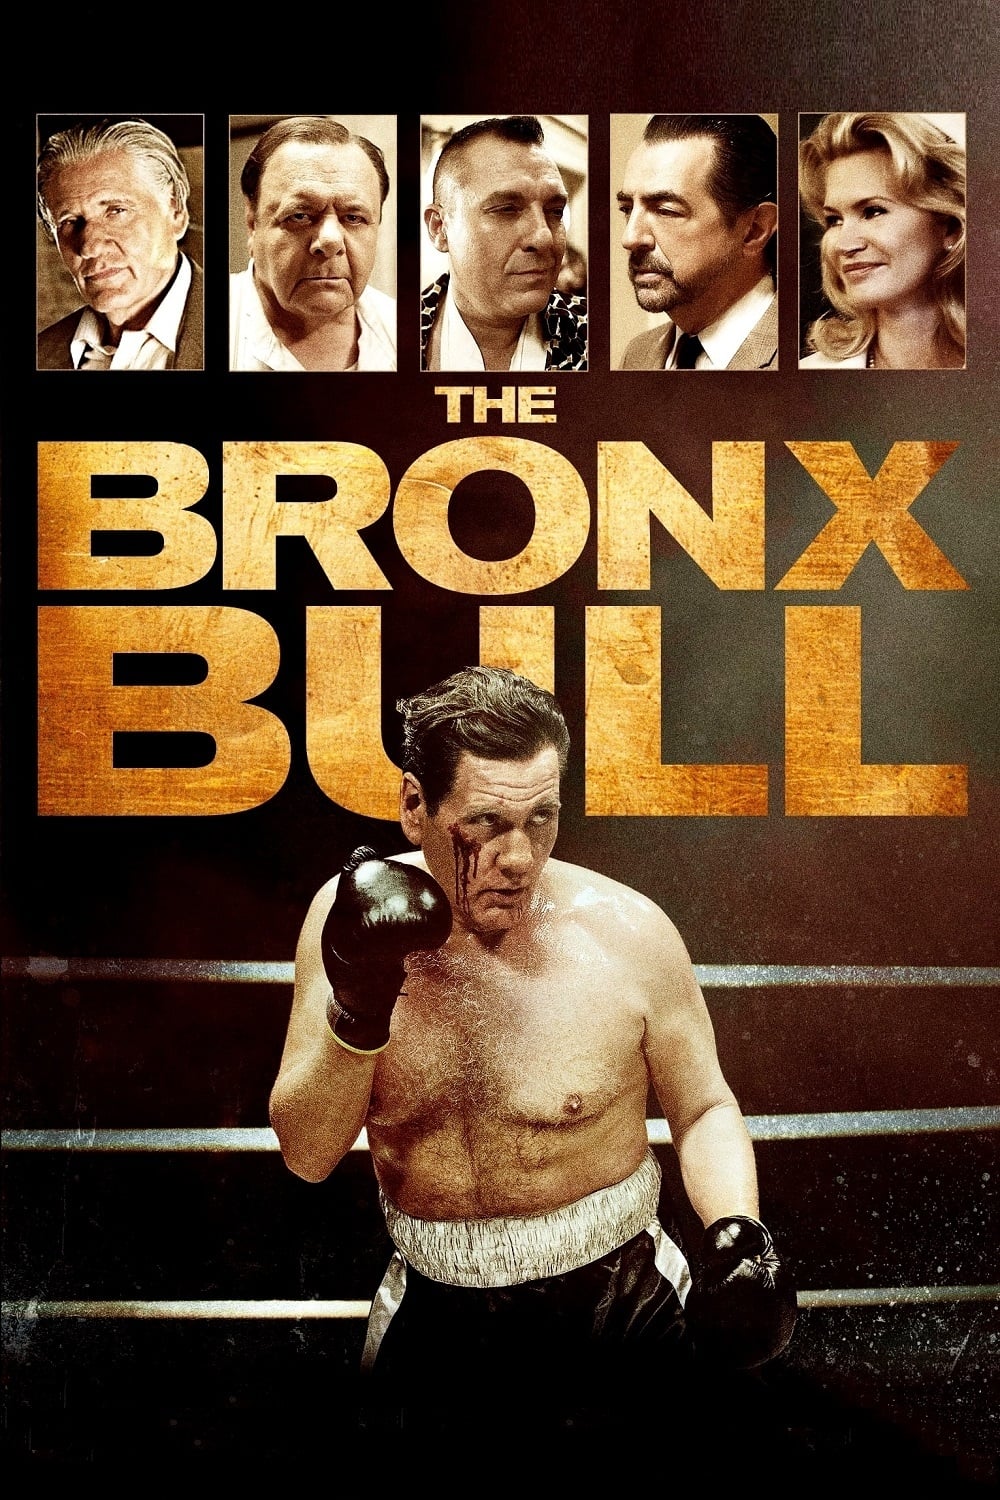 The Bronx Bull film